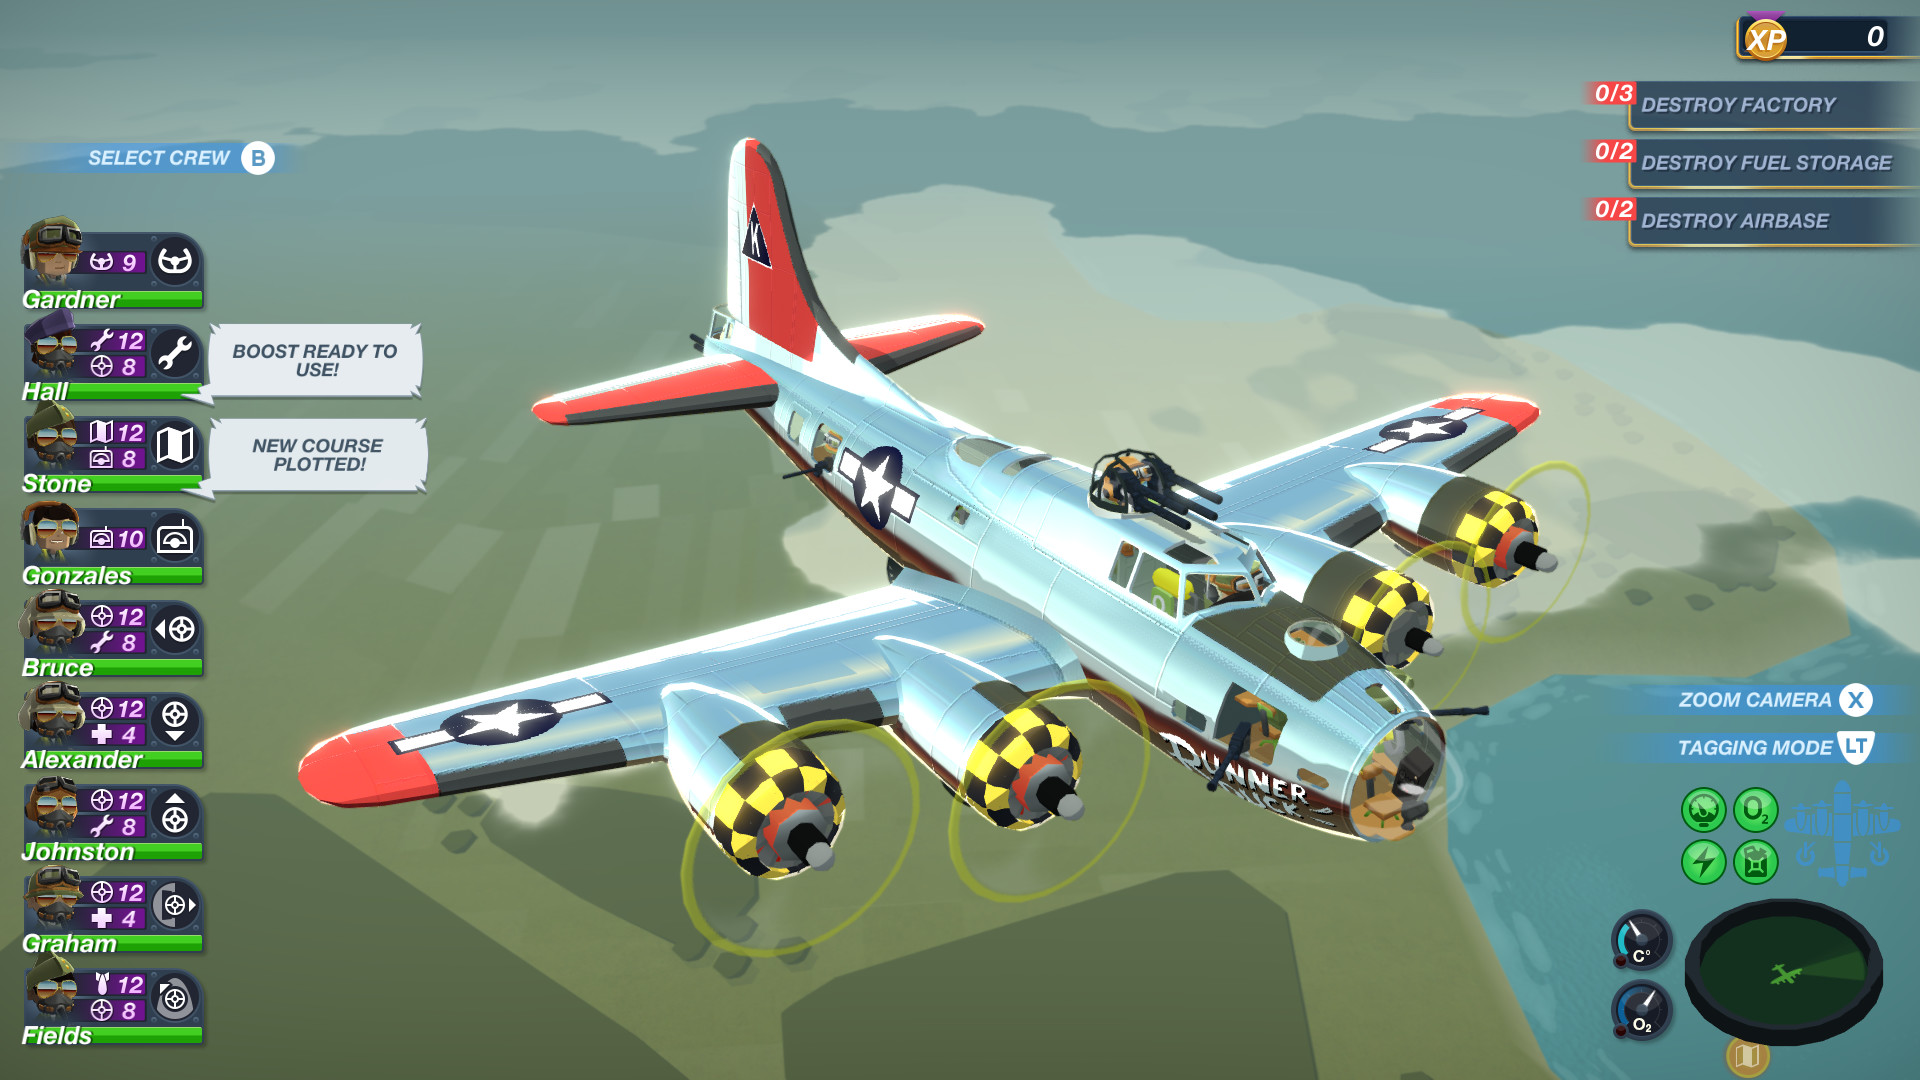 bomber crew full game free download